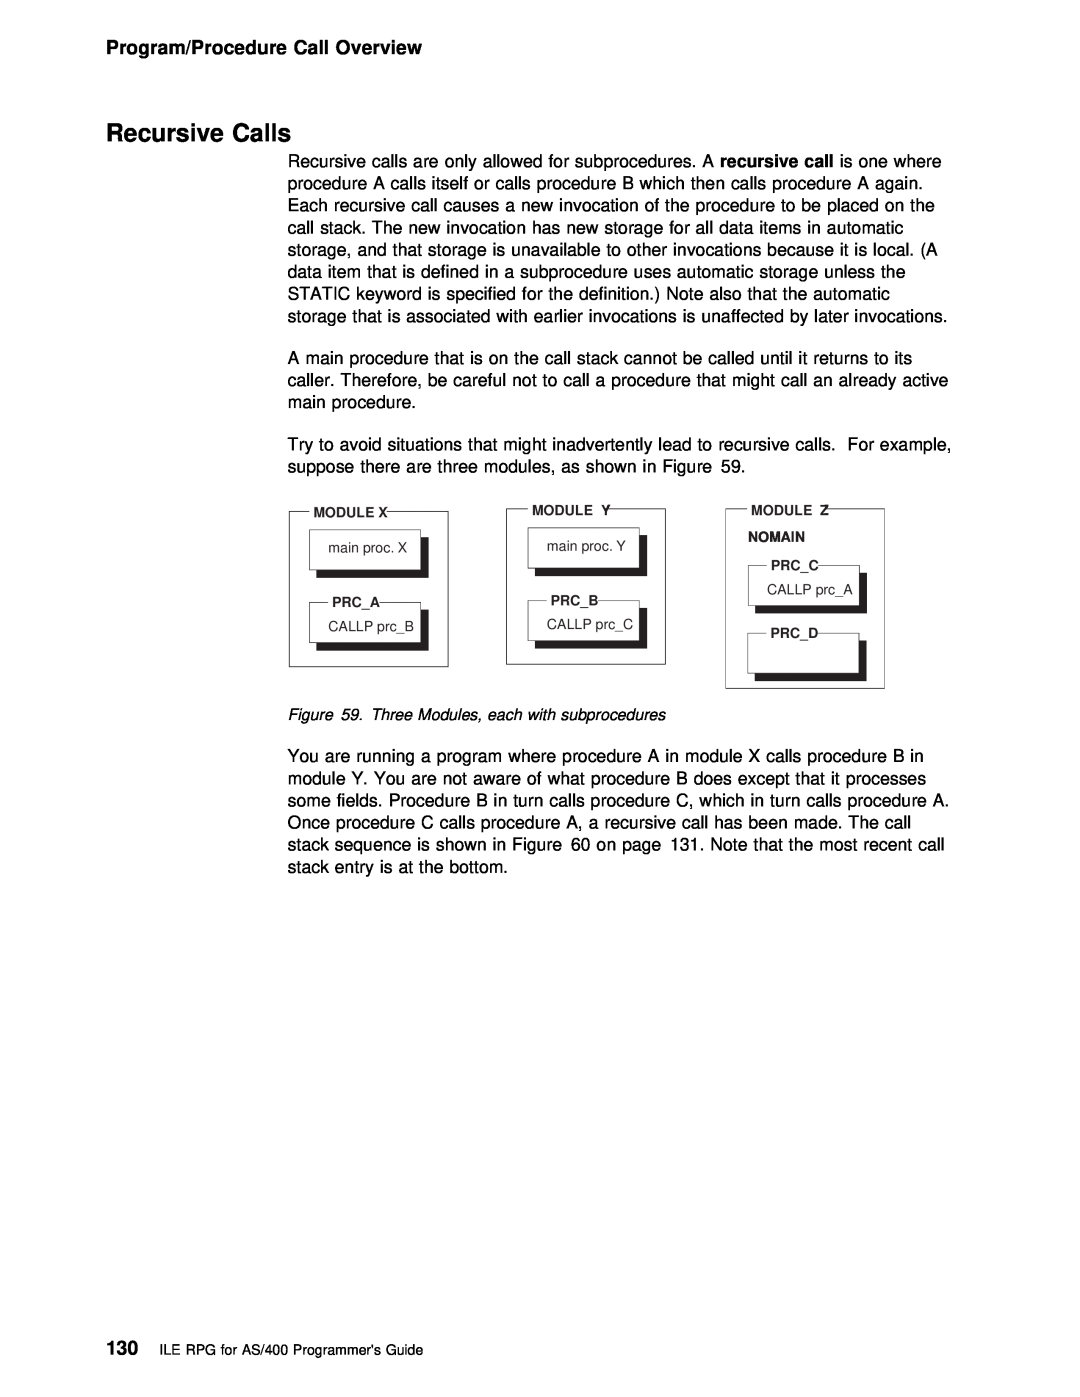 IBM AS/400 manual Recursive Calls, Program/Procedure Call Overview, Three Modules, each with subprocedures 